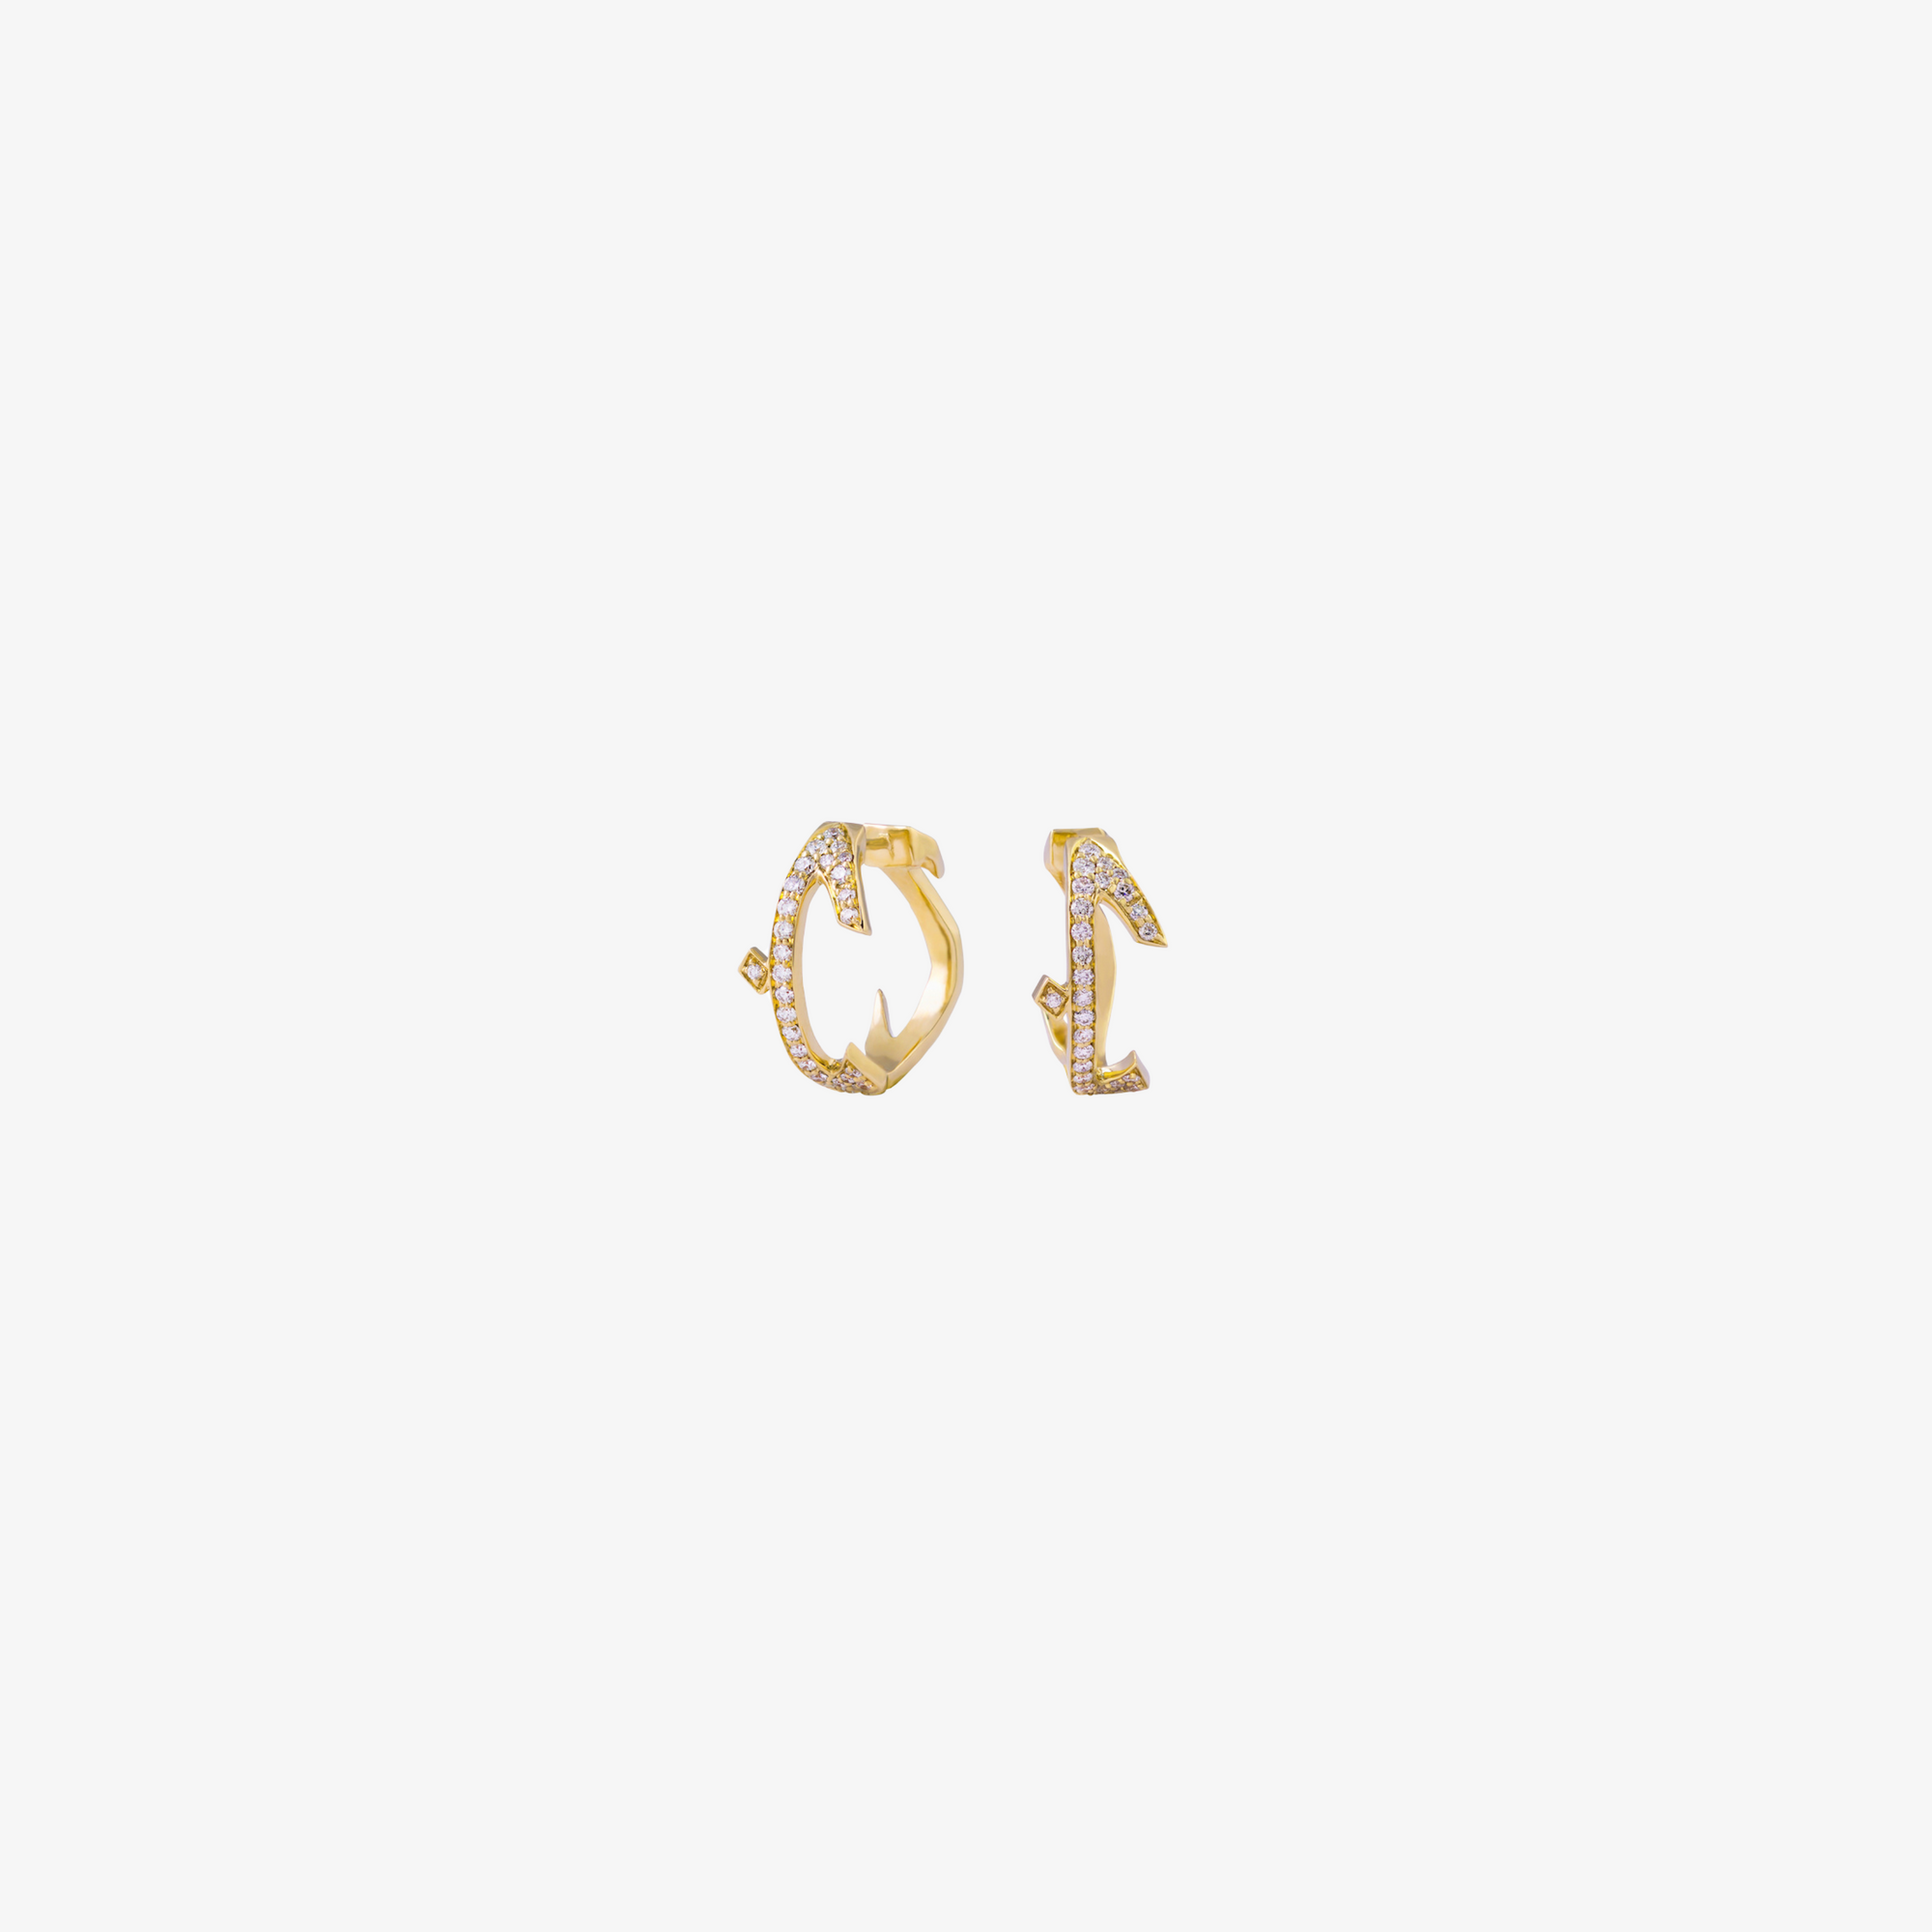 HOBBI - 18K Circle Diamond “Love” Earrings